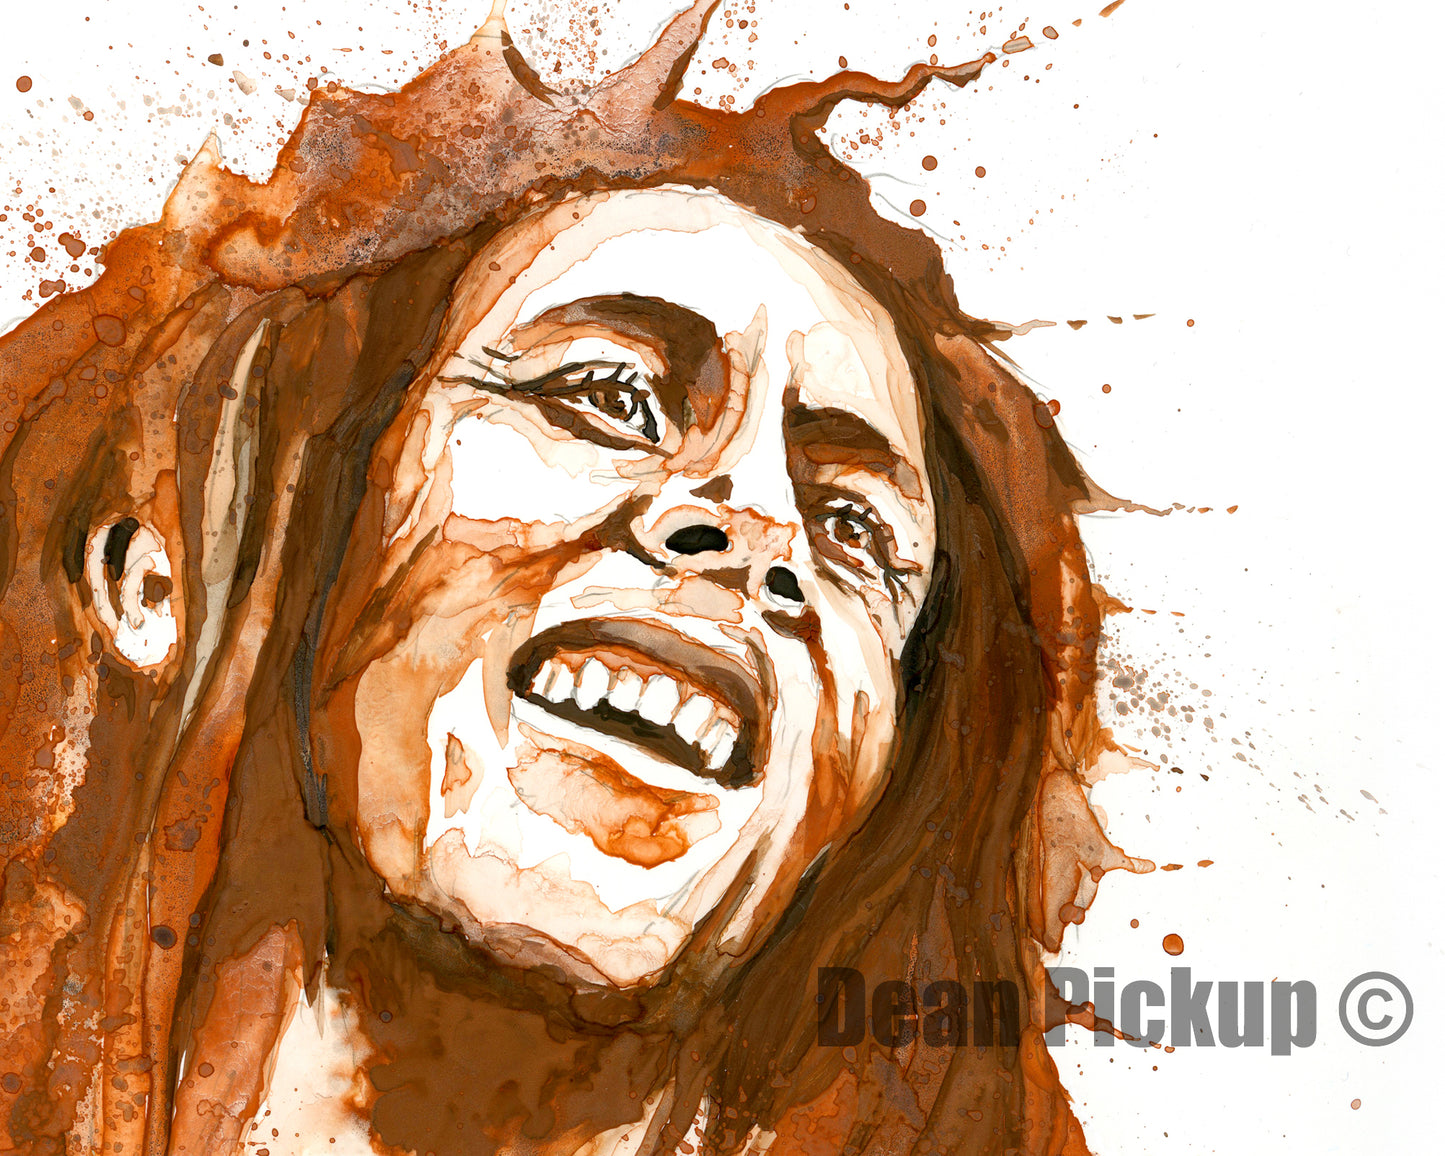 Bob Marley, Fine Art Print - 11"x14"